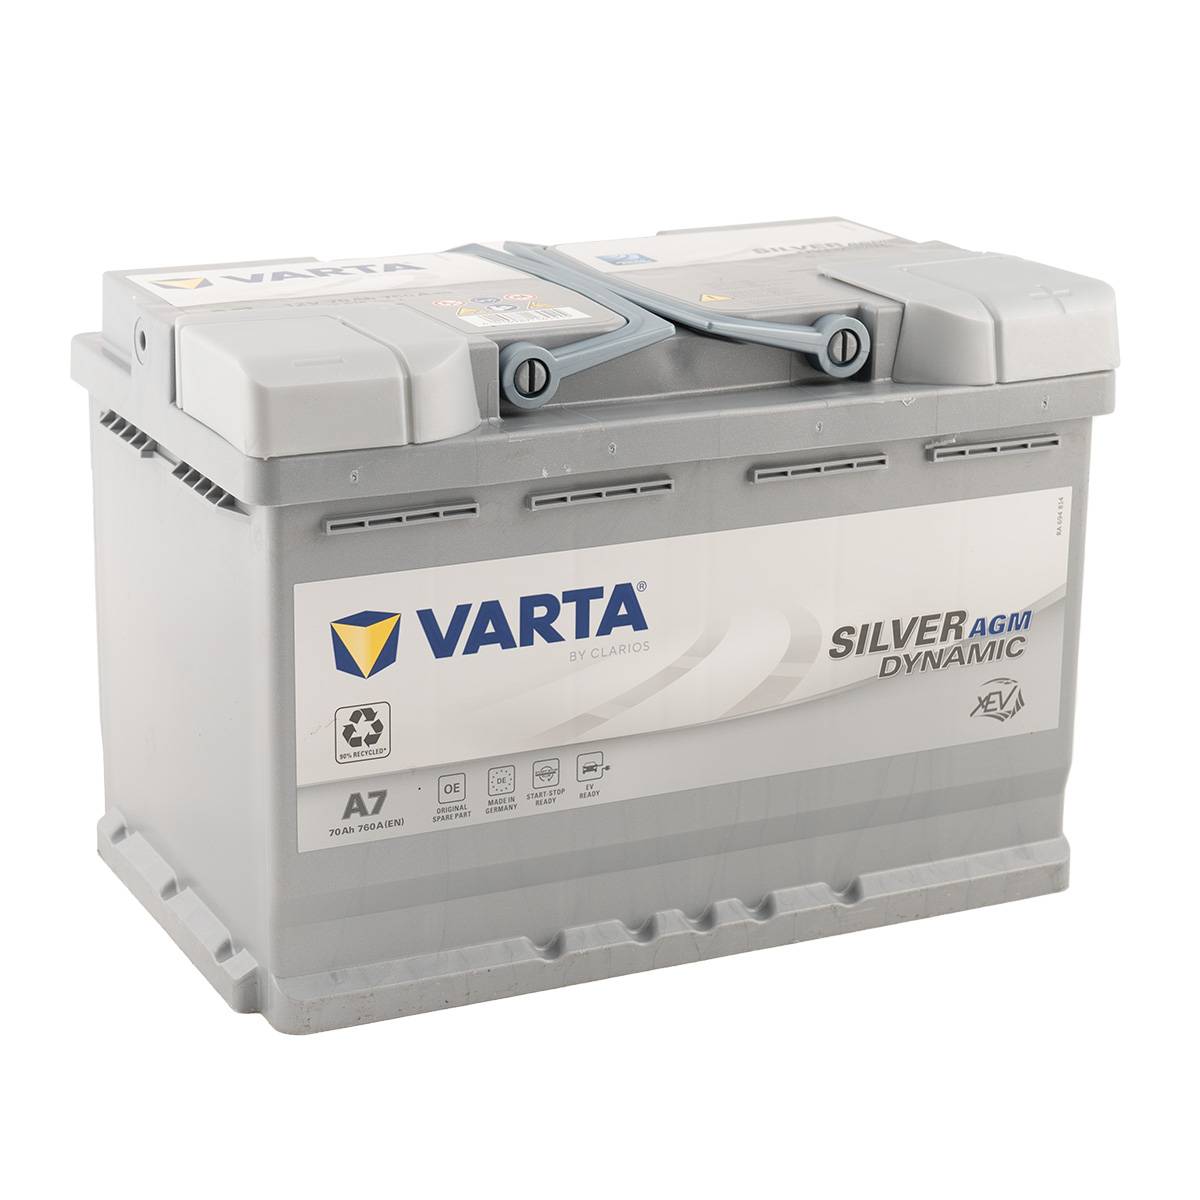 12V EFB Autobatterie 70Ah 720A Start Stop Starterbatterie Wartungsfrei  Batterie 4016987152317